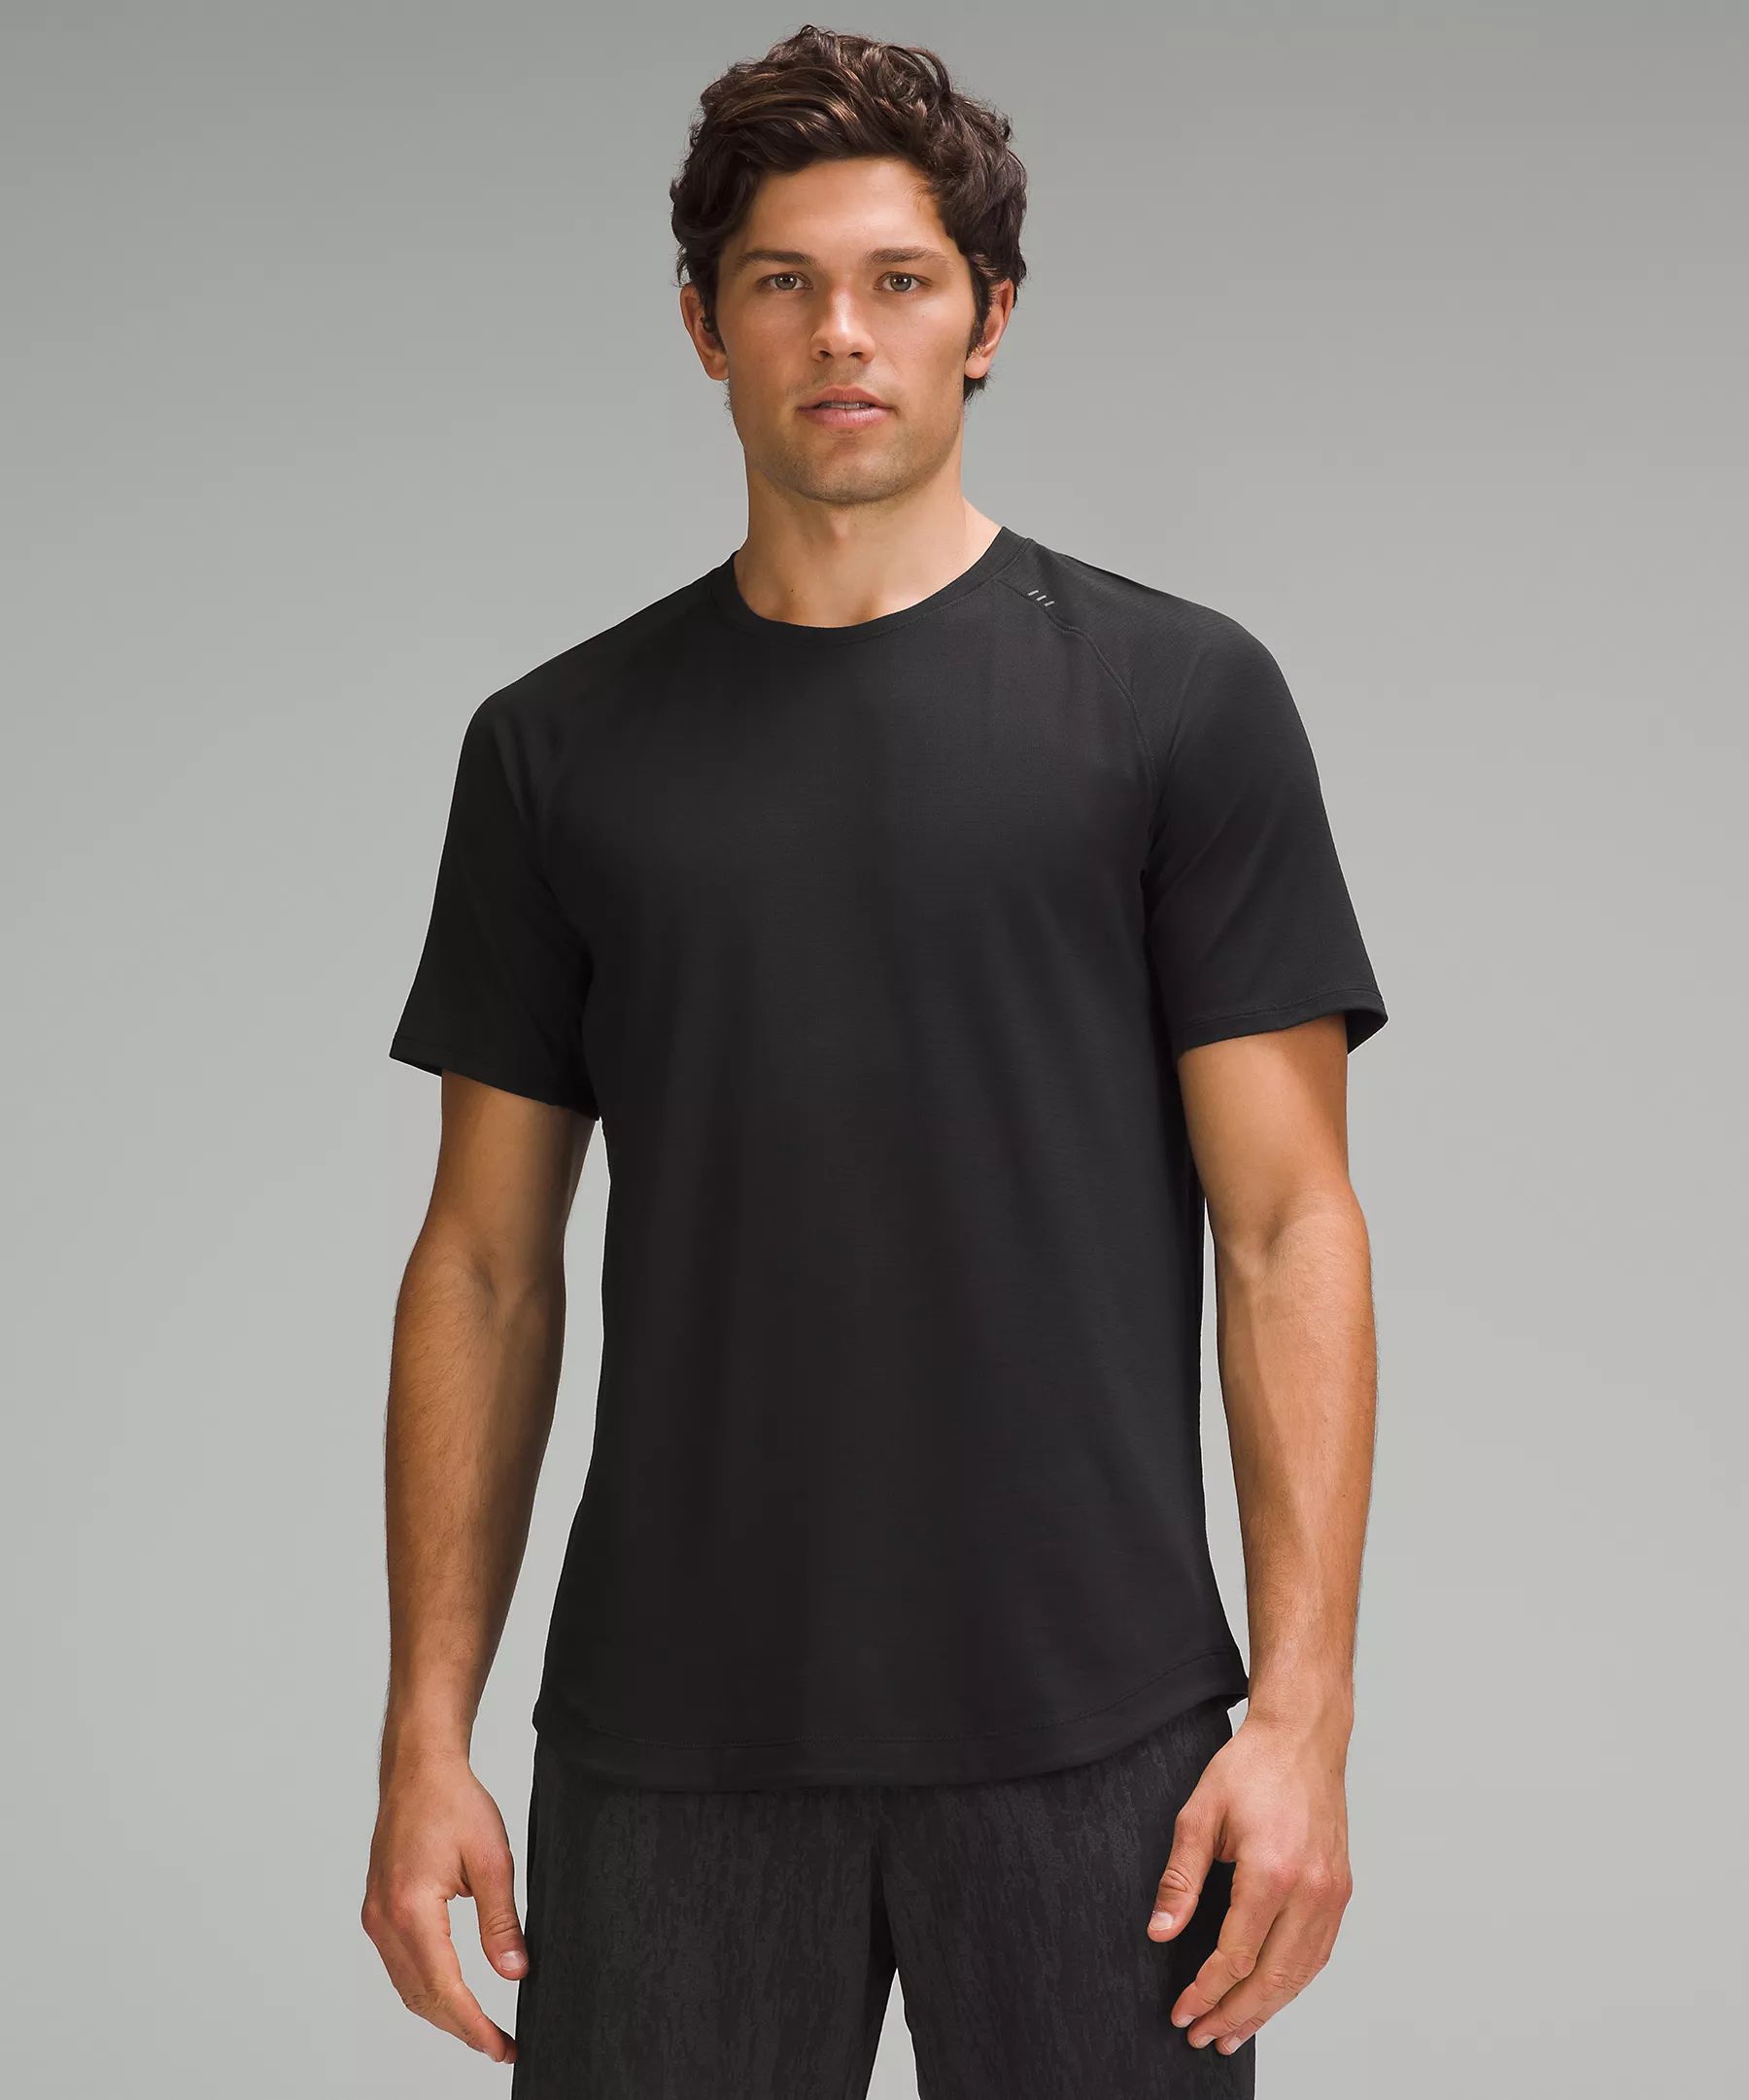 License to Train Short-Sleeve Shirt | Men's Short Sleeve Shirts & Tee's | lululemon | Lululemon (US)